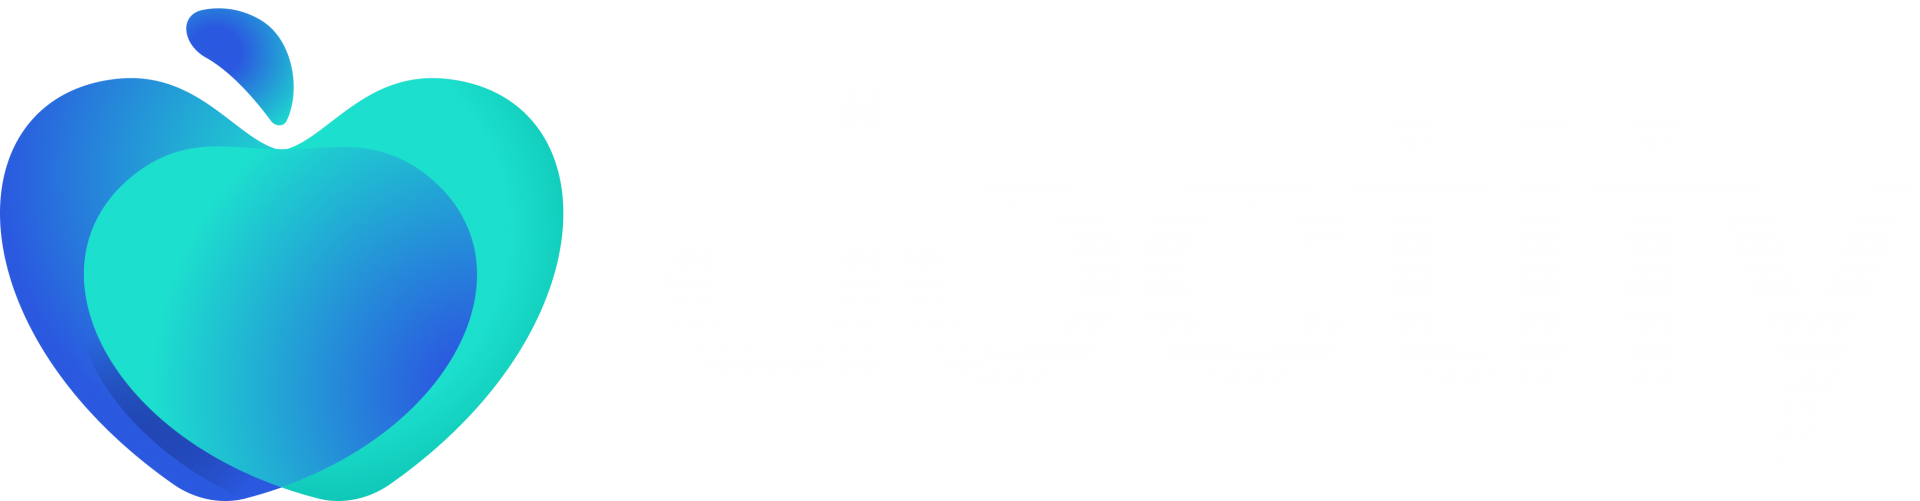 Doctify logo light